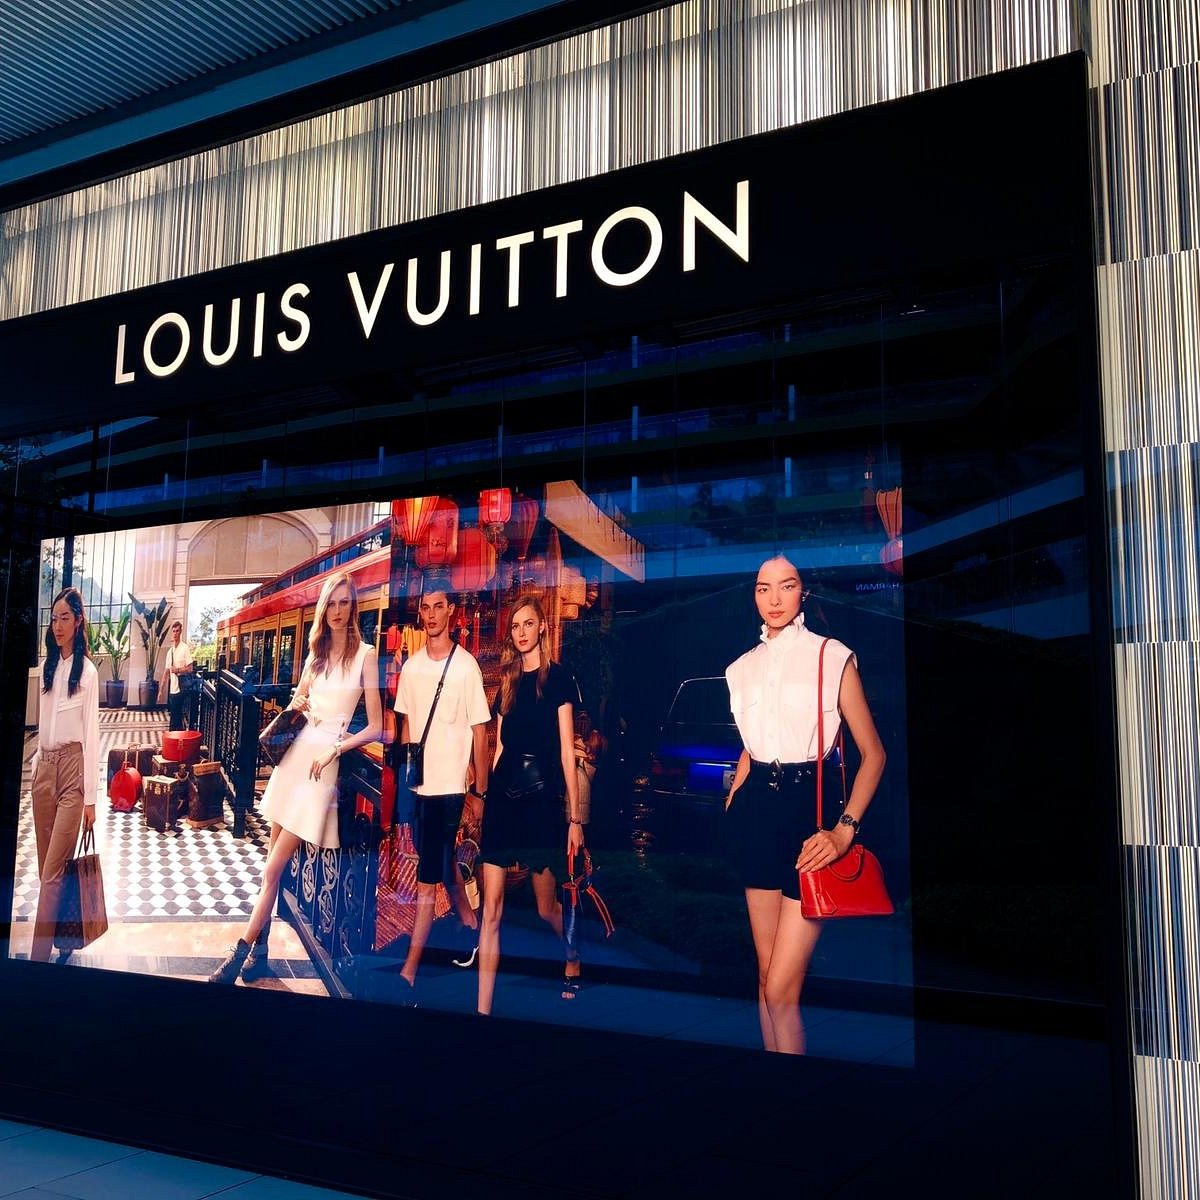 Is Louis Vuitton Vegan Friendly